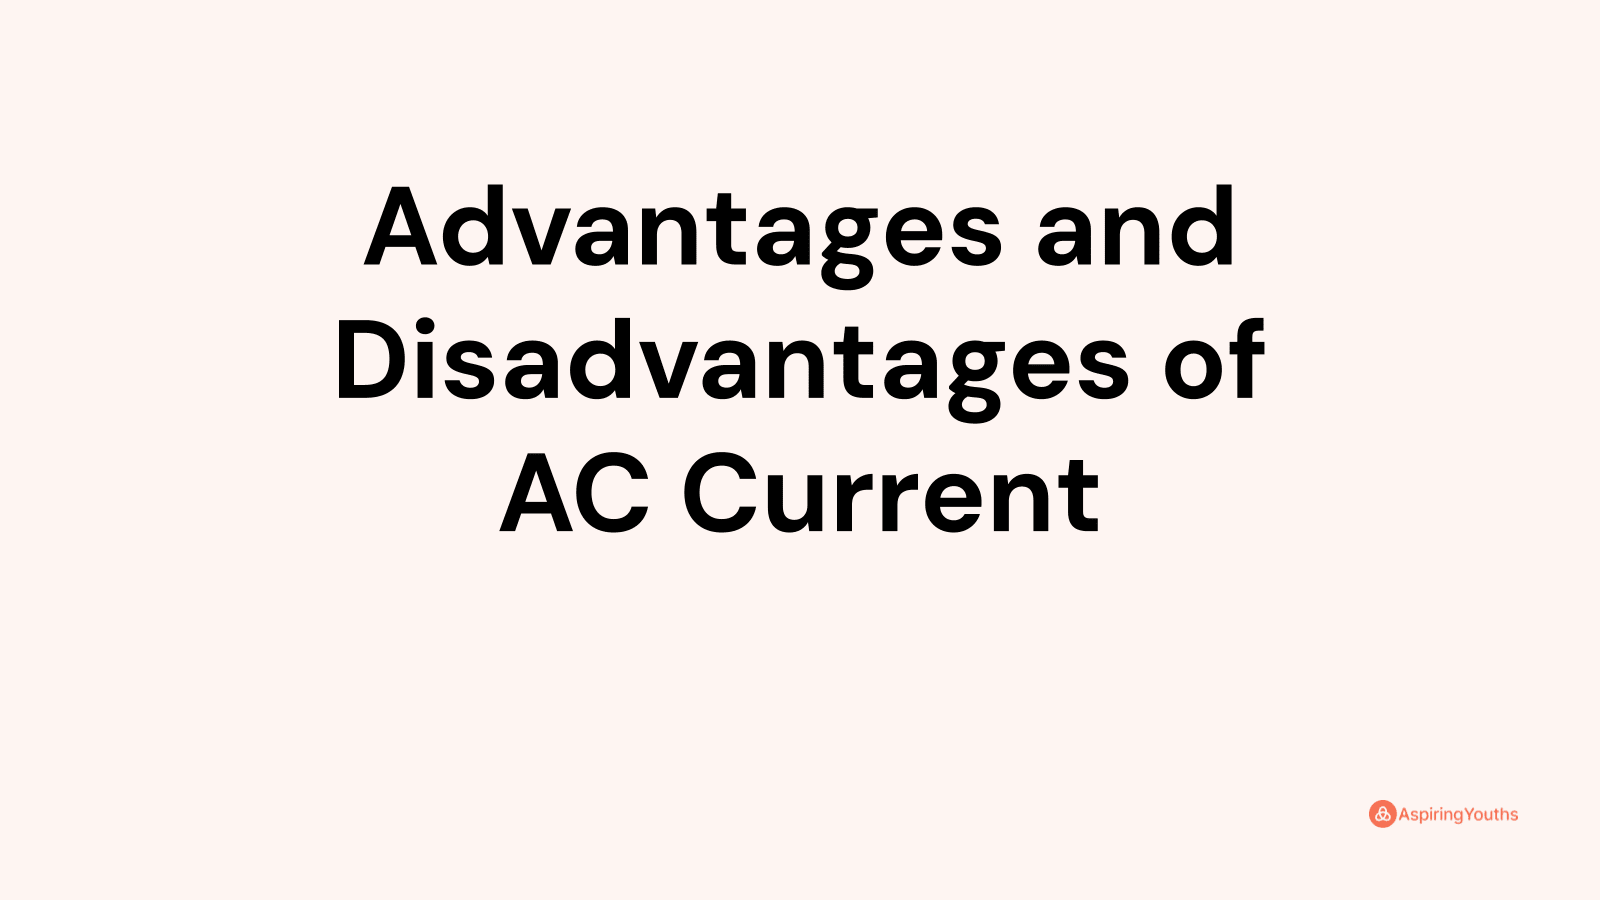 Advantages and disadvantages of AC Current